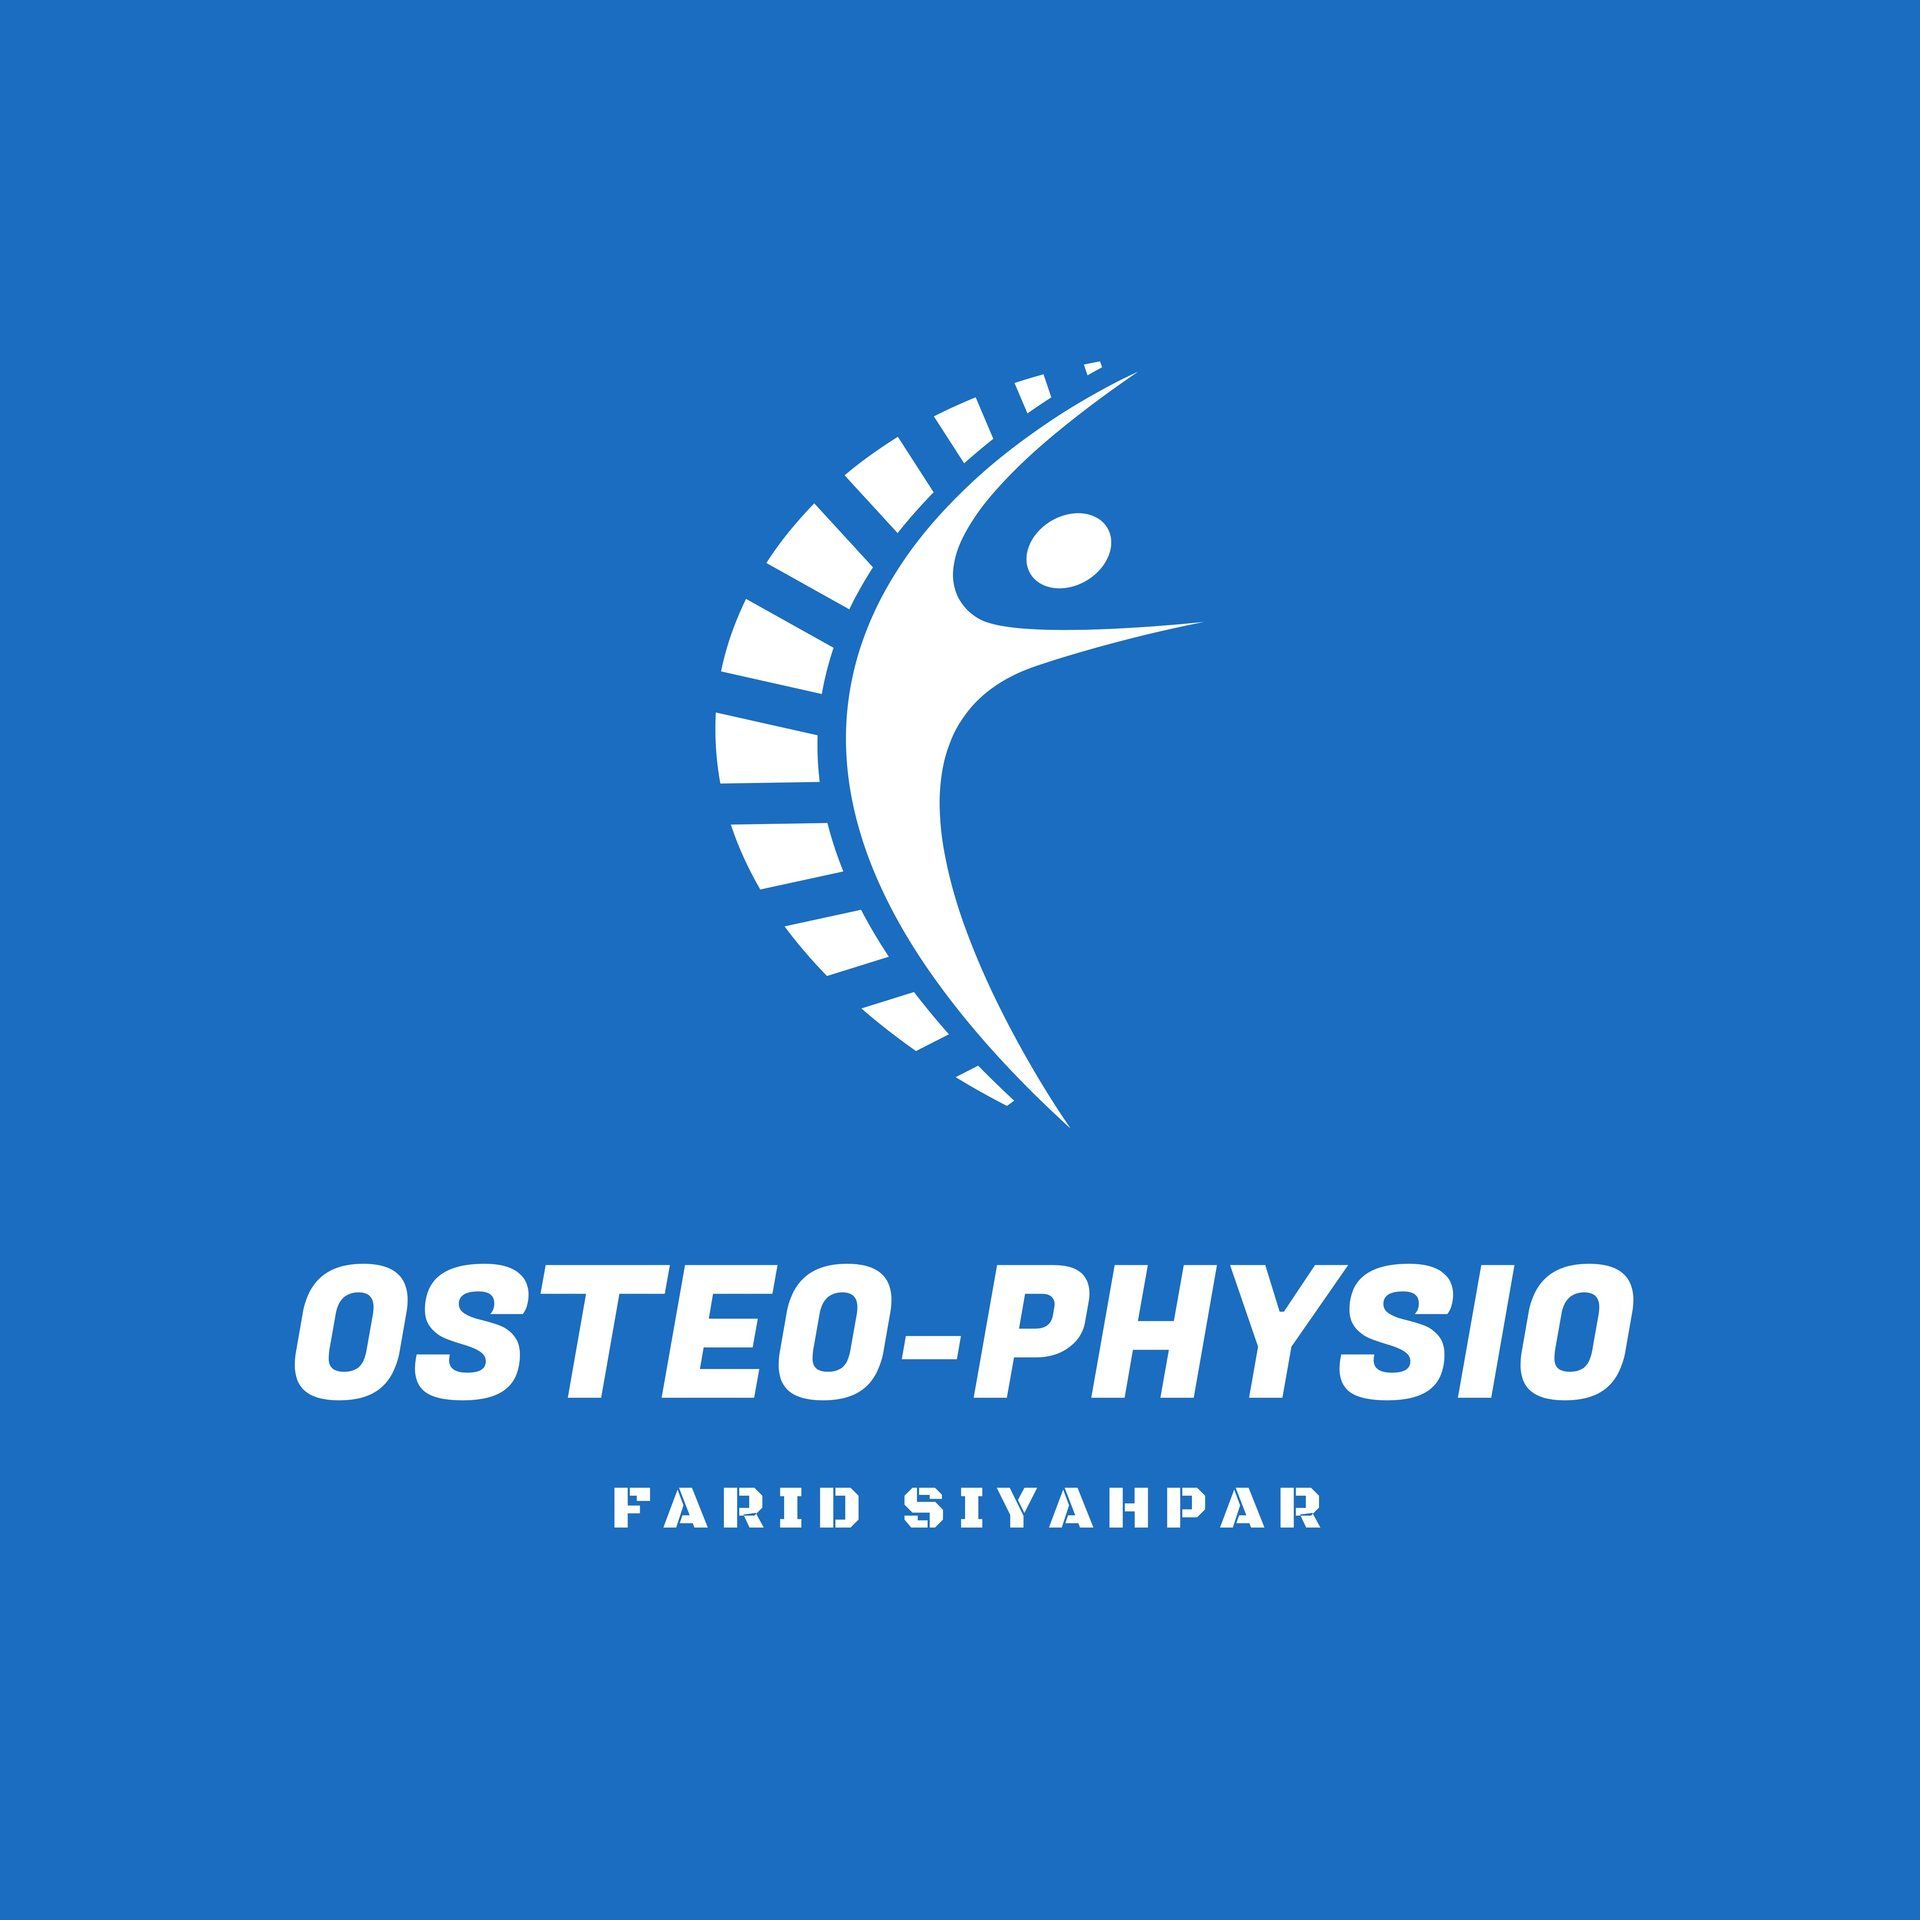 (c) Osteo-physio.at